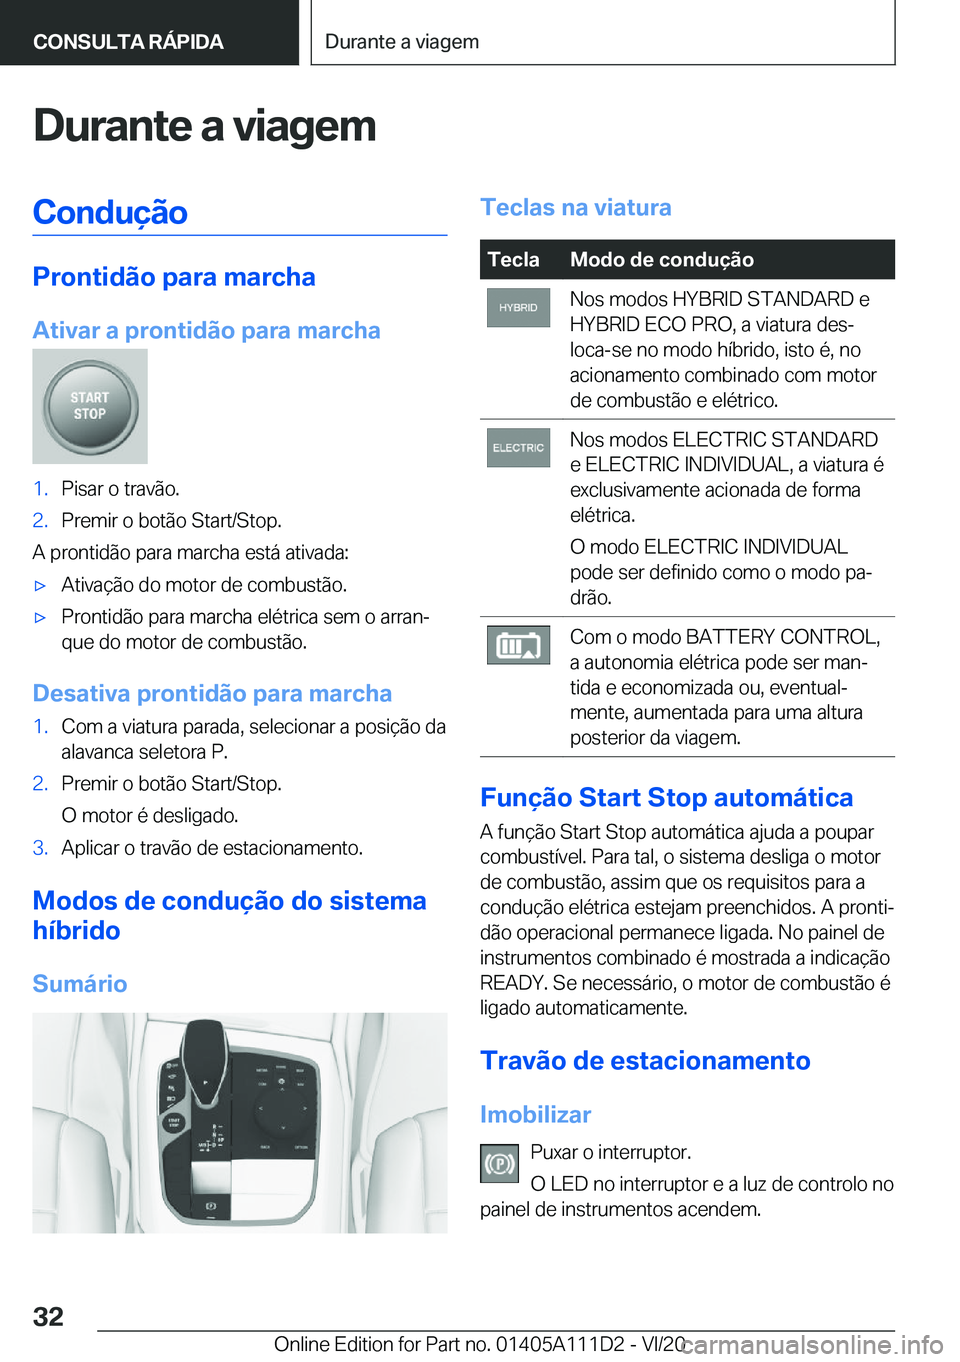 BMW 3 SERIES SEDAN PLUG-IN HYBRID 2021  Manual do condutor (in Portuguese) �D�u�r�a�n�t�e��a��v�i�a�g�e�m�C�o�n�d�u�